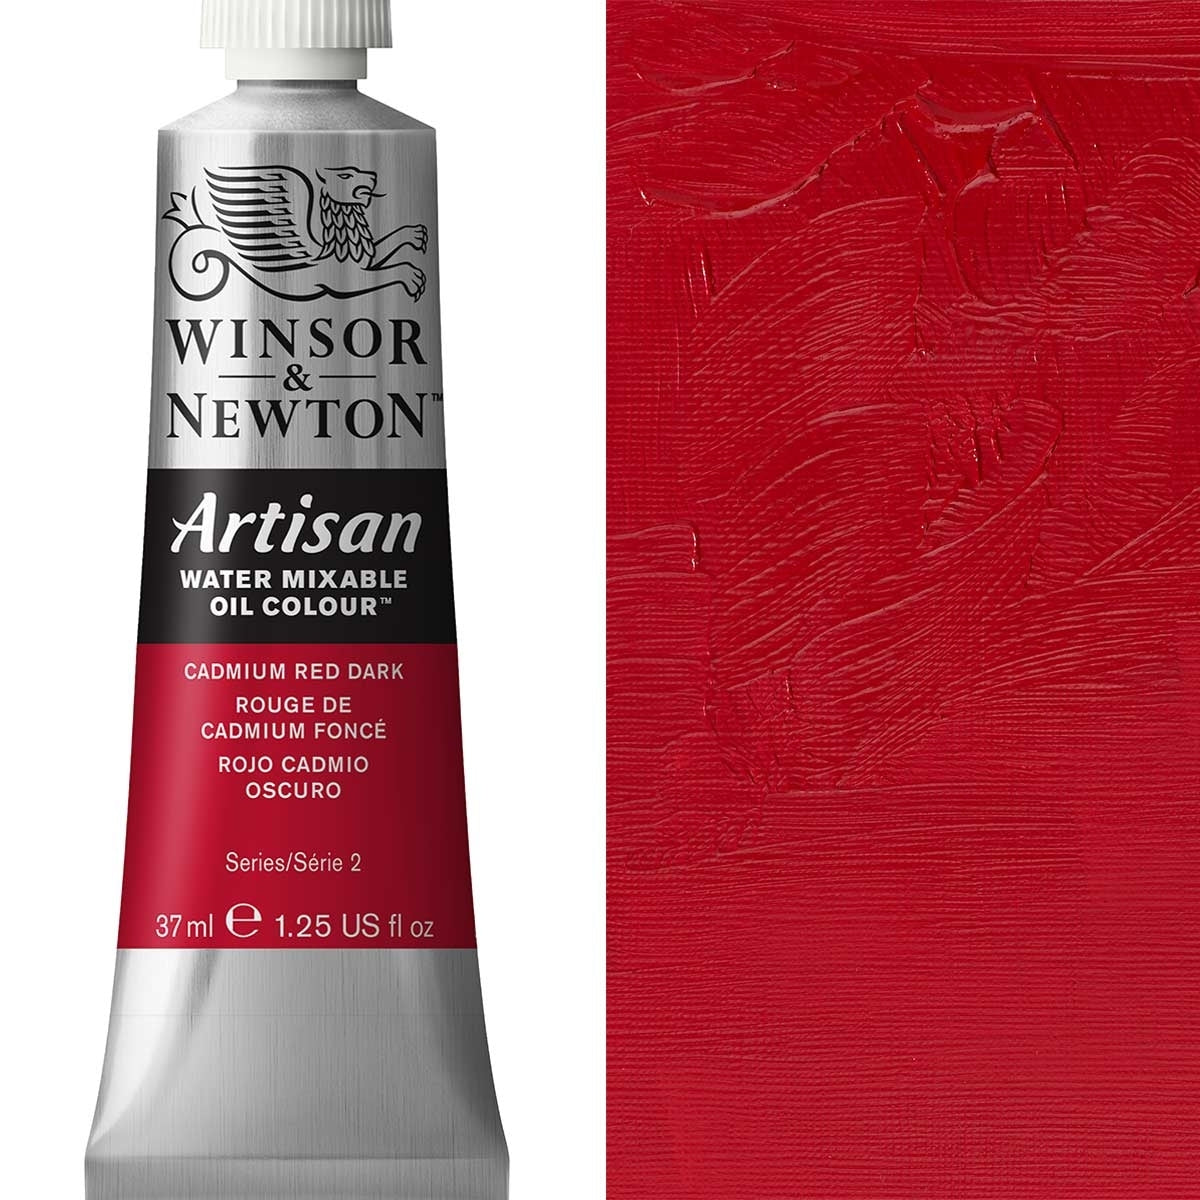 Winsor and Newton - Artisan Oil Colour Watermixable - 37ml - Cadmium Red Dark